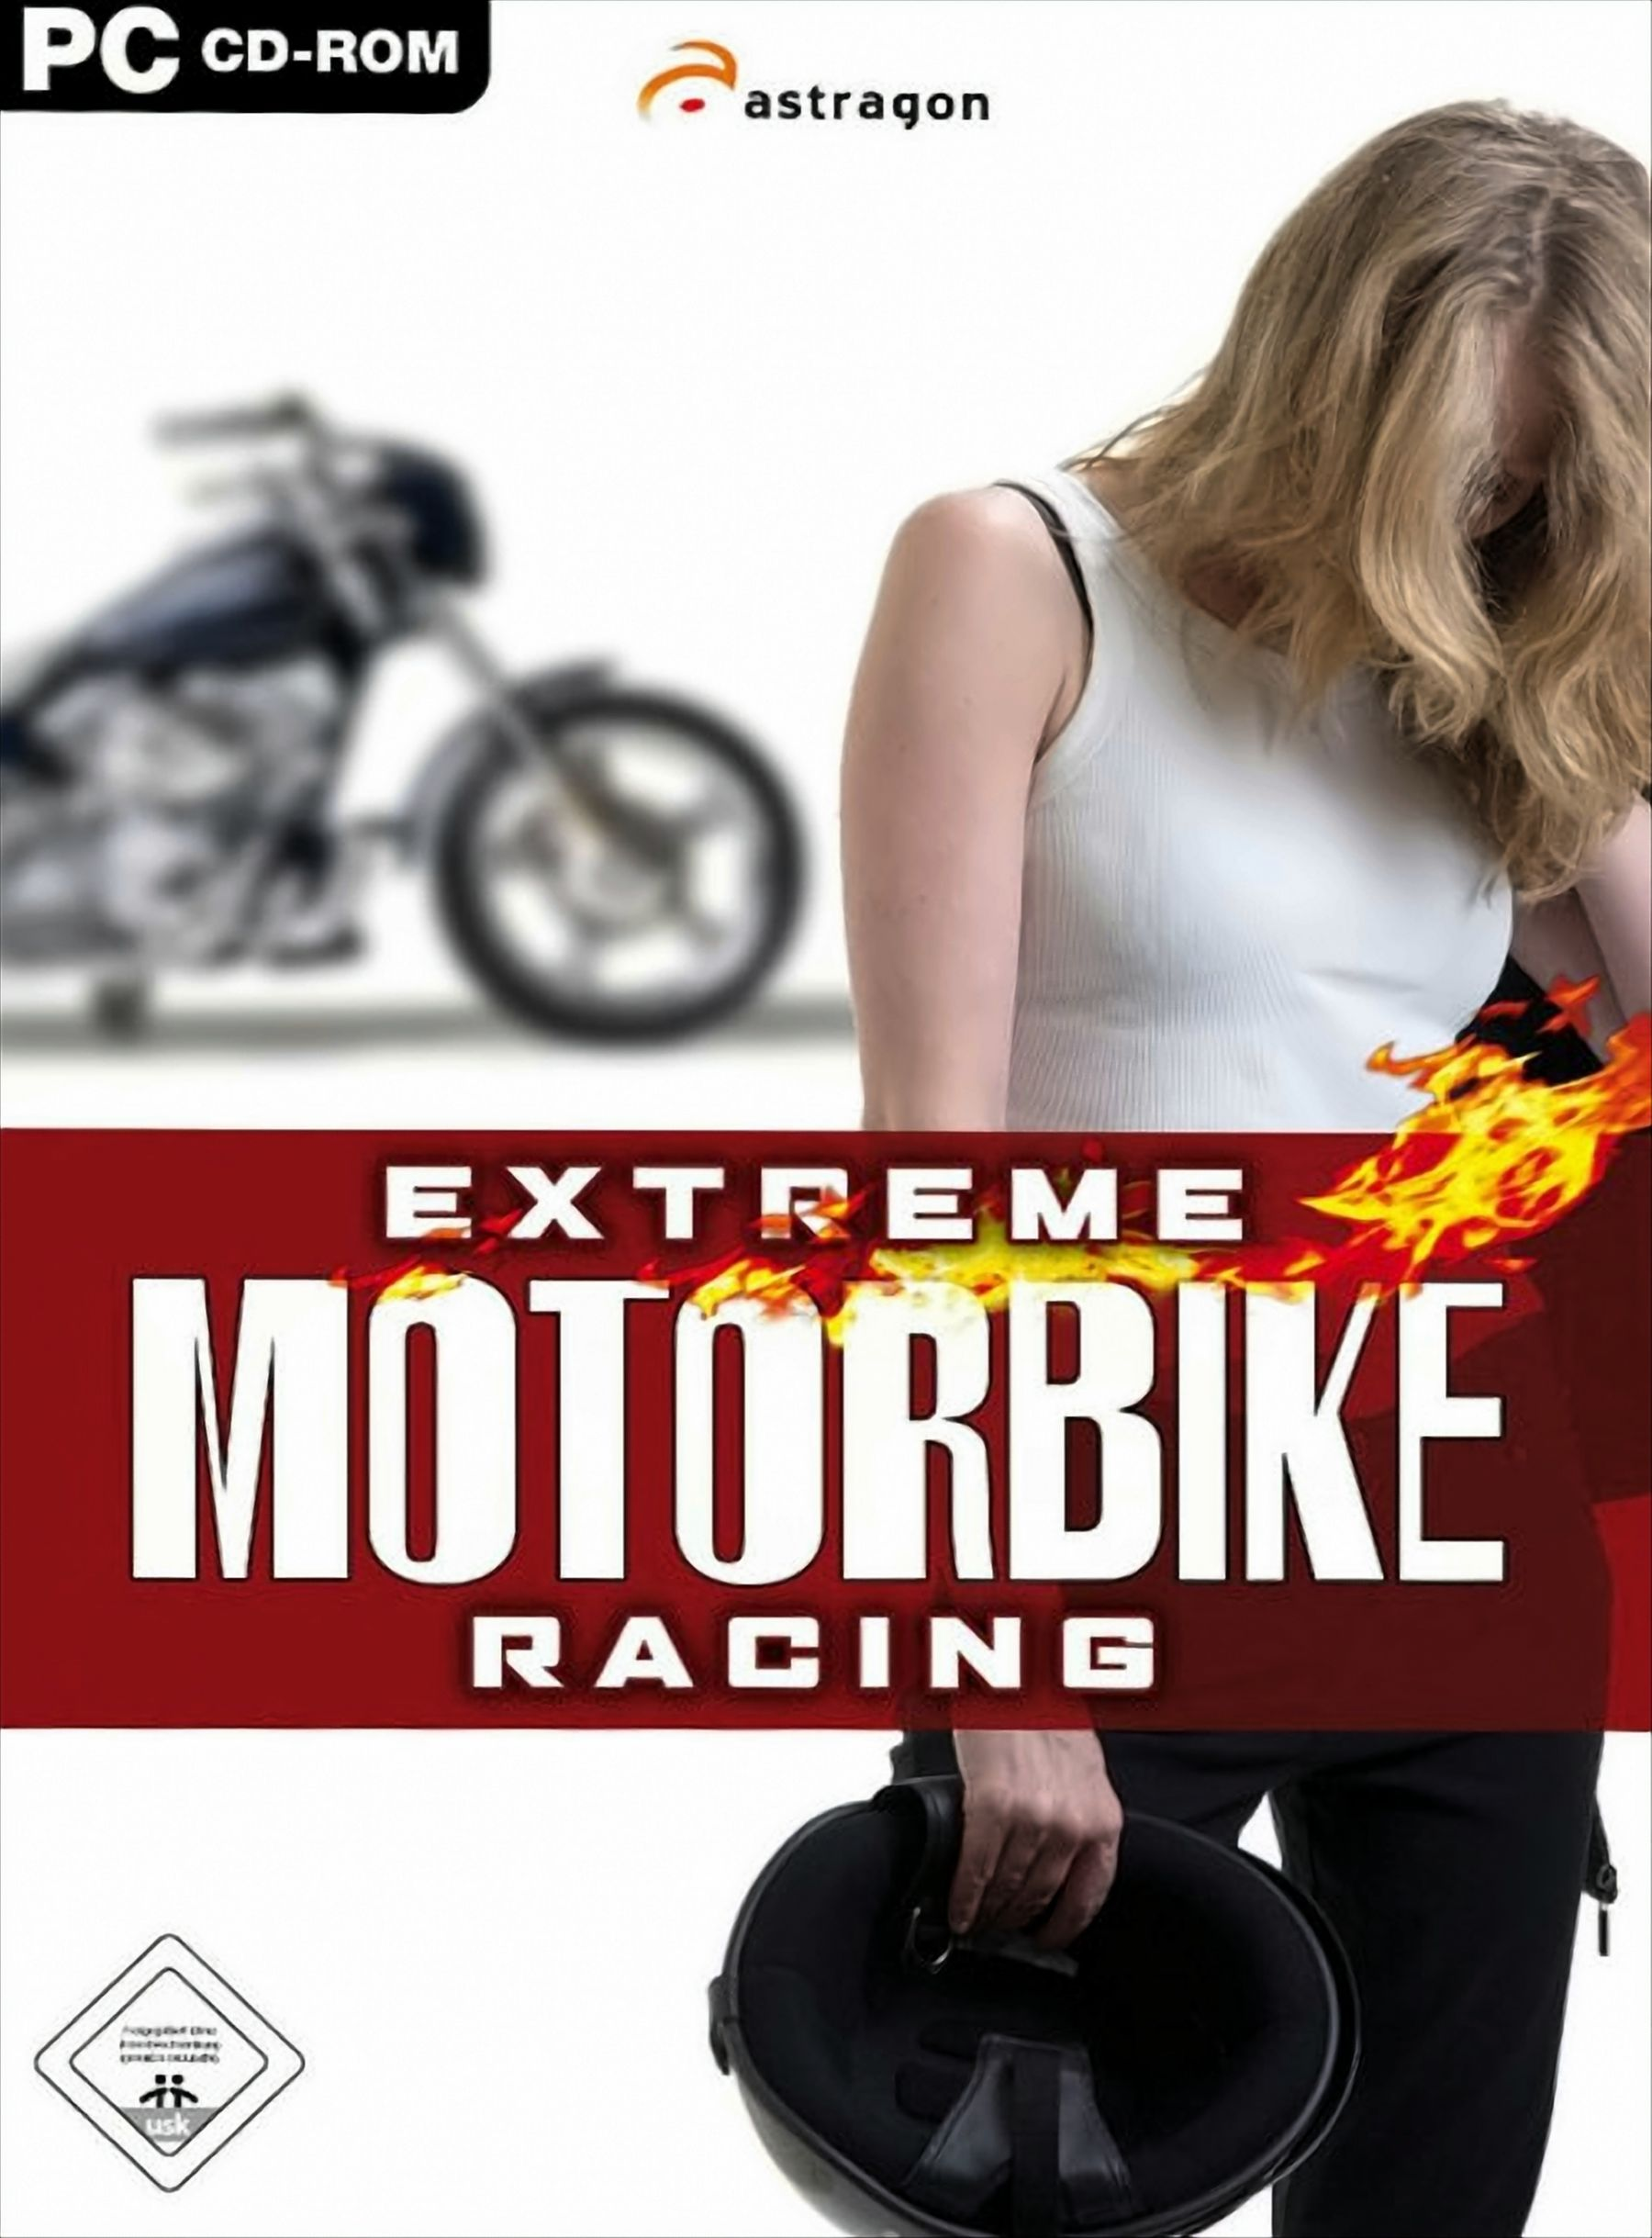 [PC] Racing Motorbike - Extreme